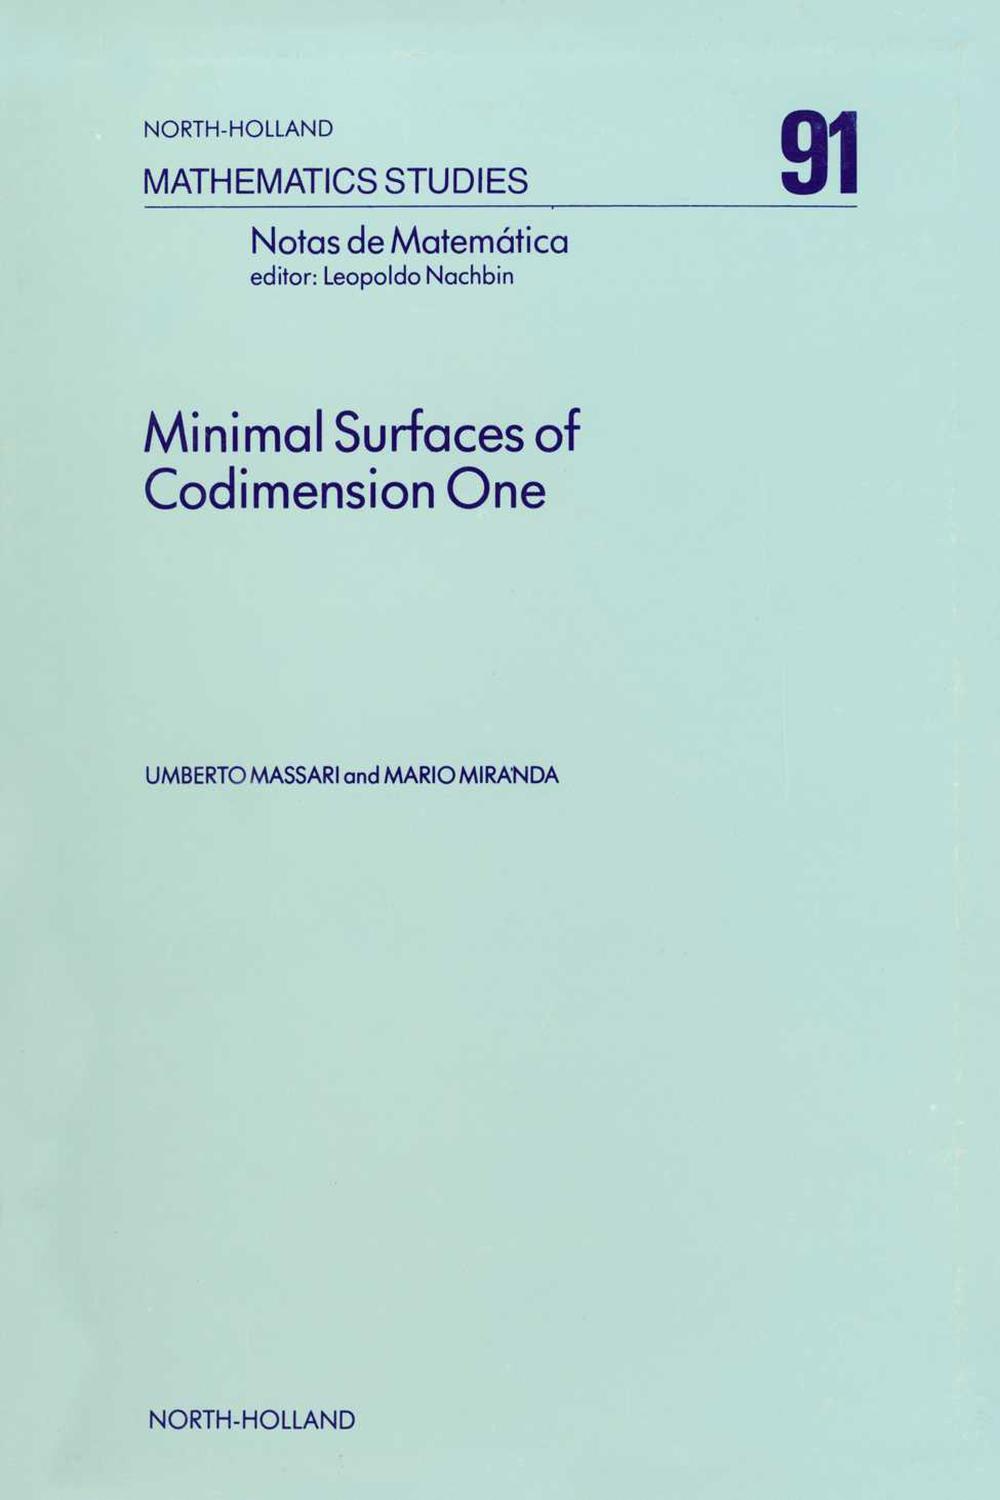 Minimal Surfaces of Codimension One - U. Massari, M. Miranda